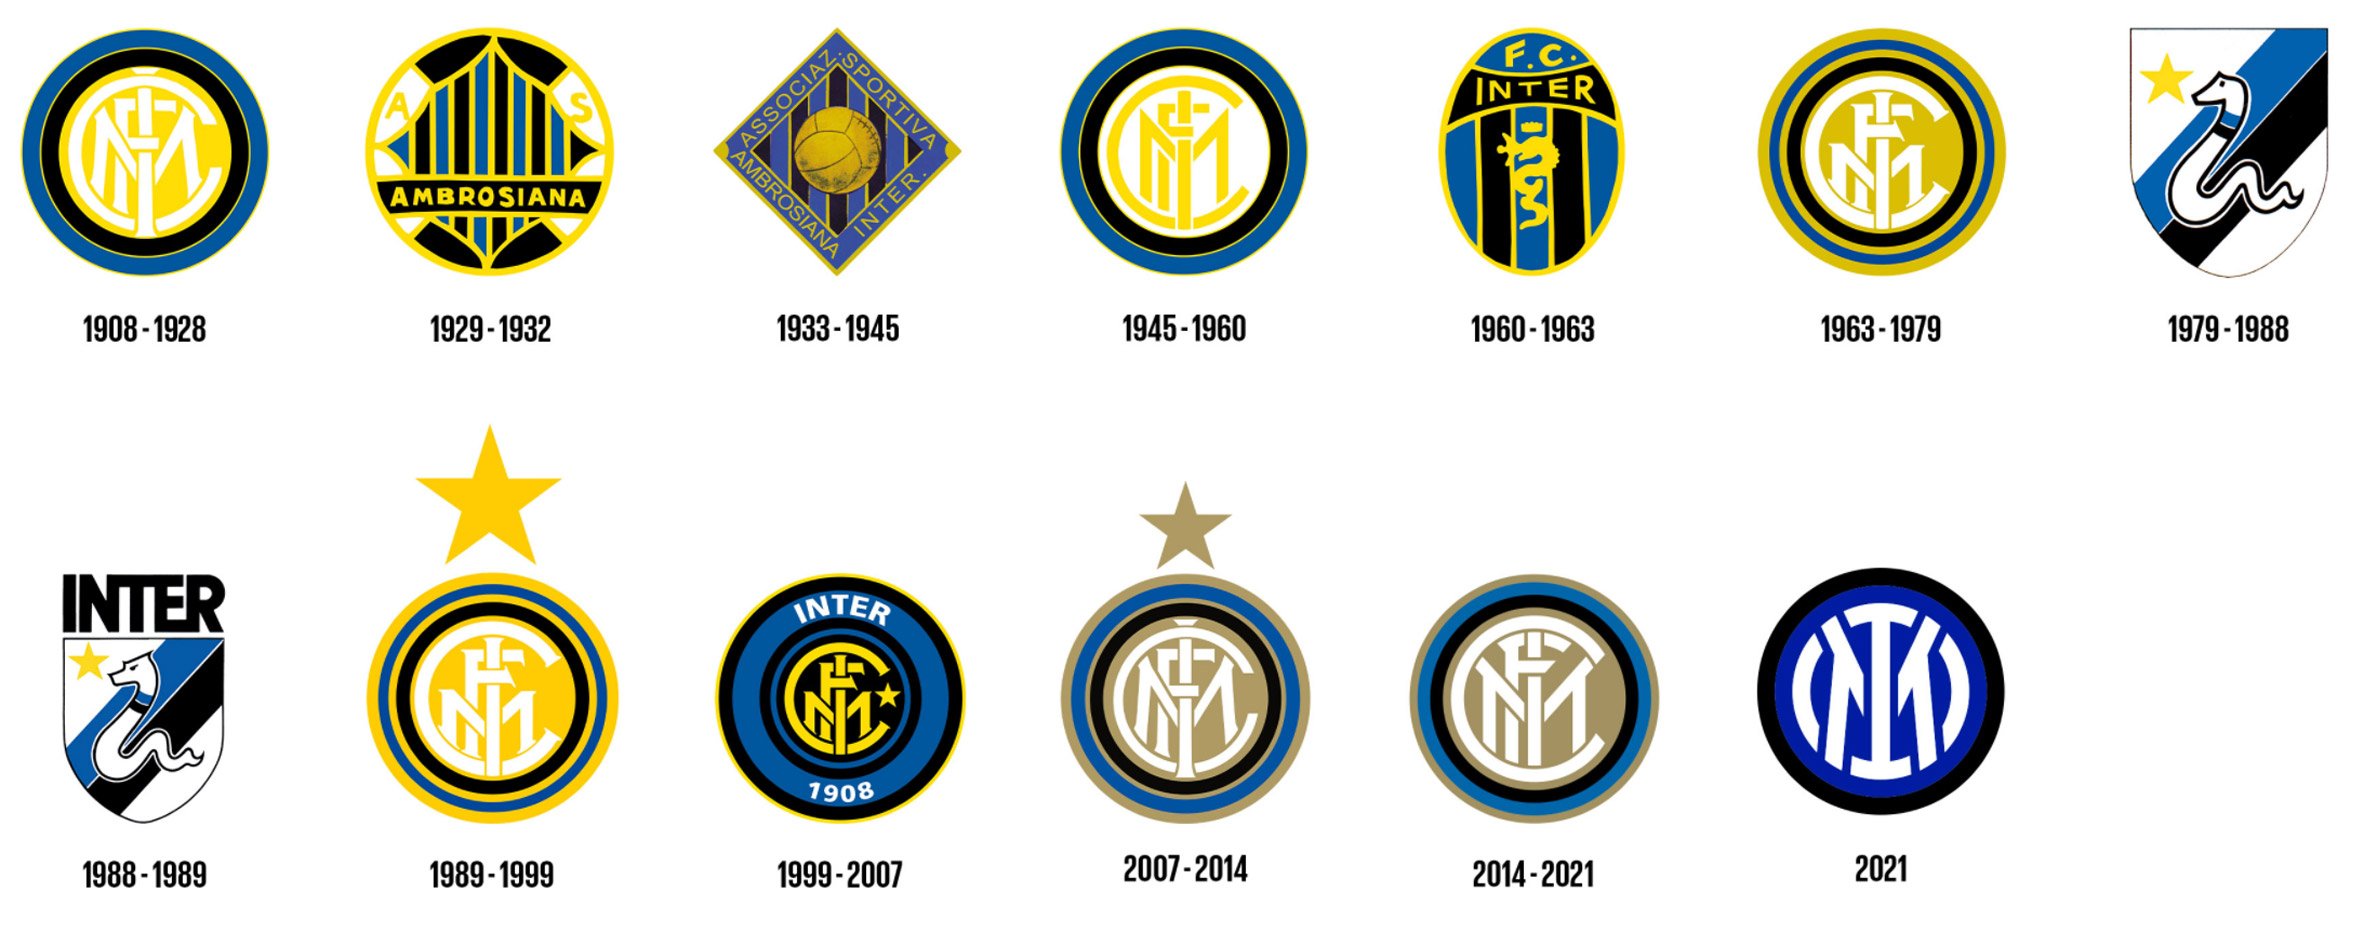 Evolution of Inter Milan's crest